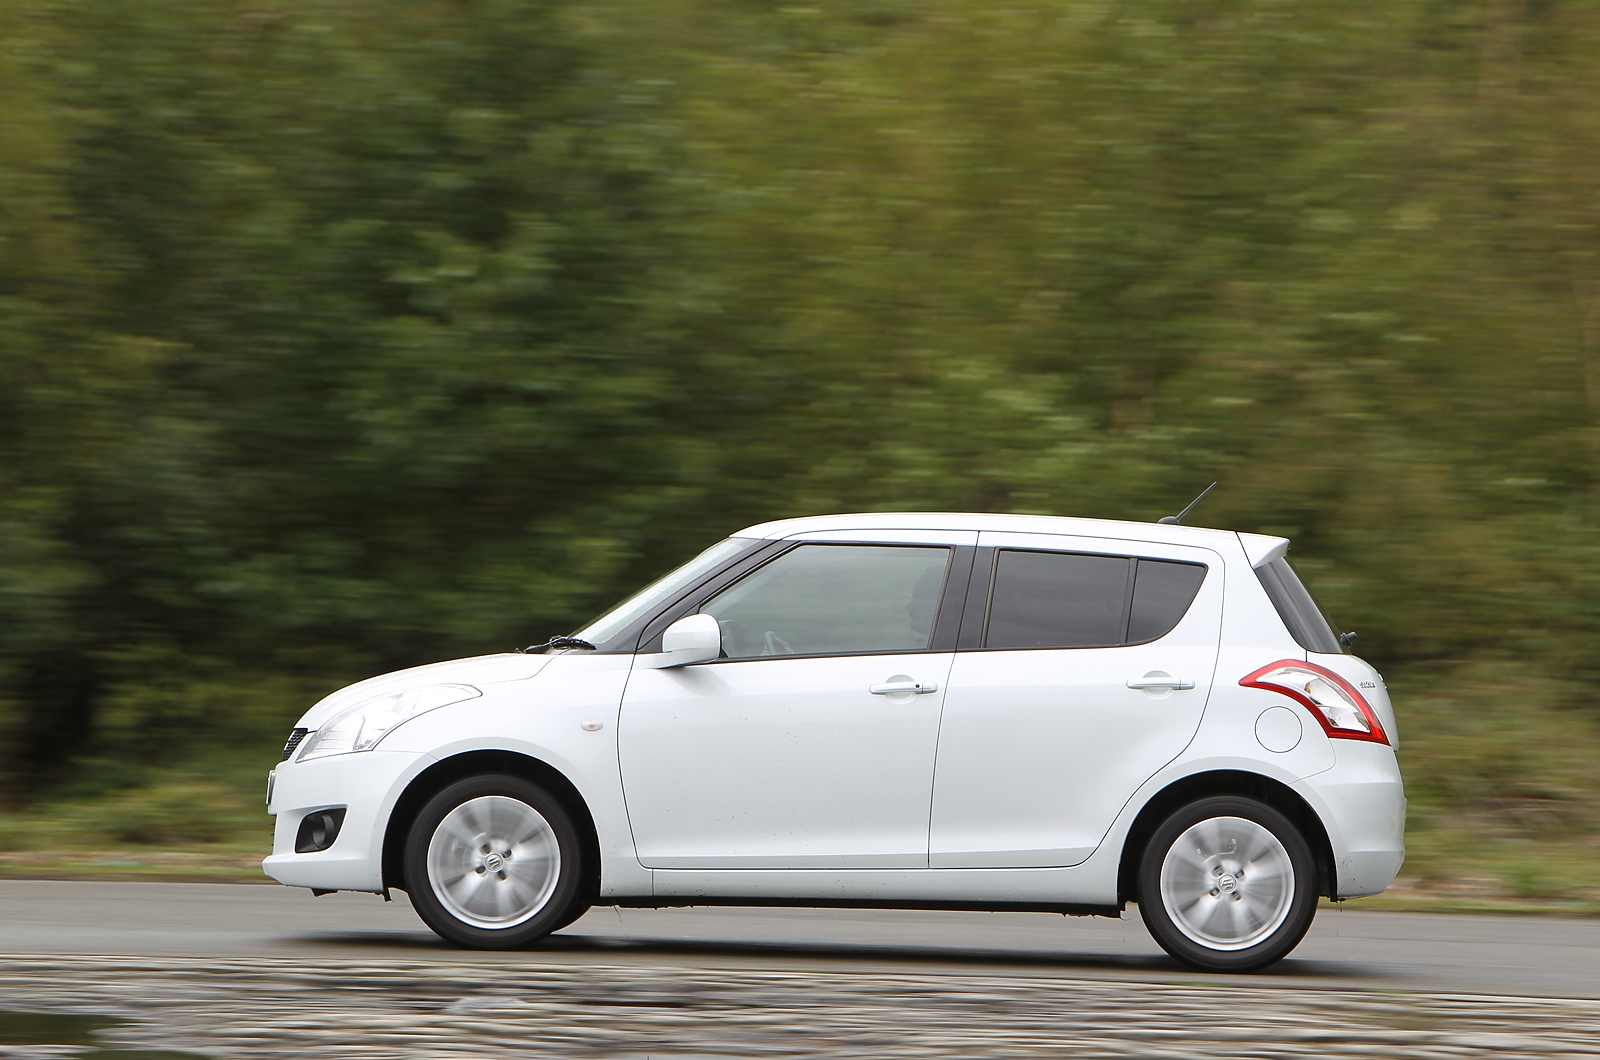 Used Suzuki Swift 2010-2013 review